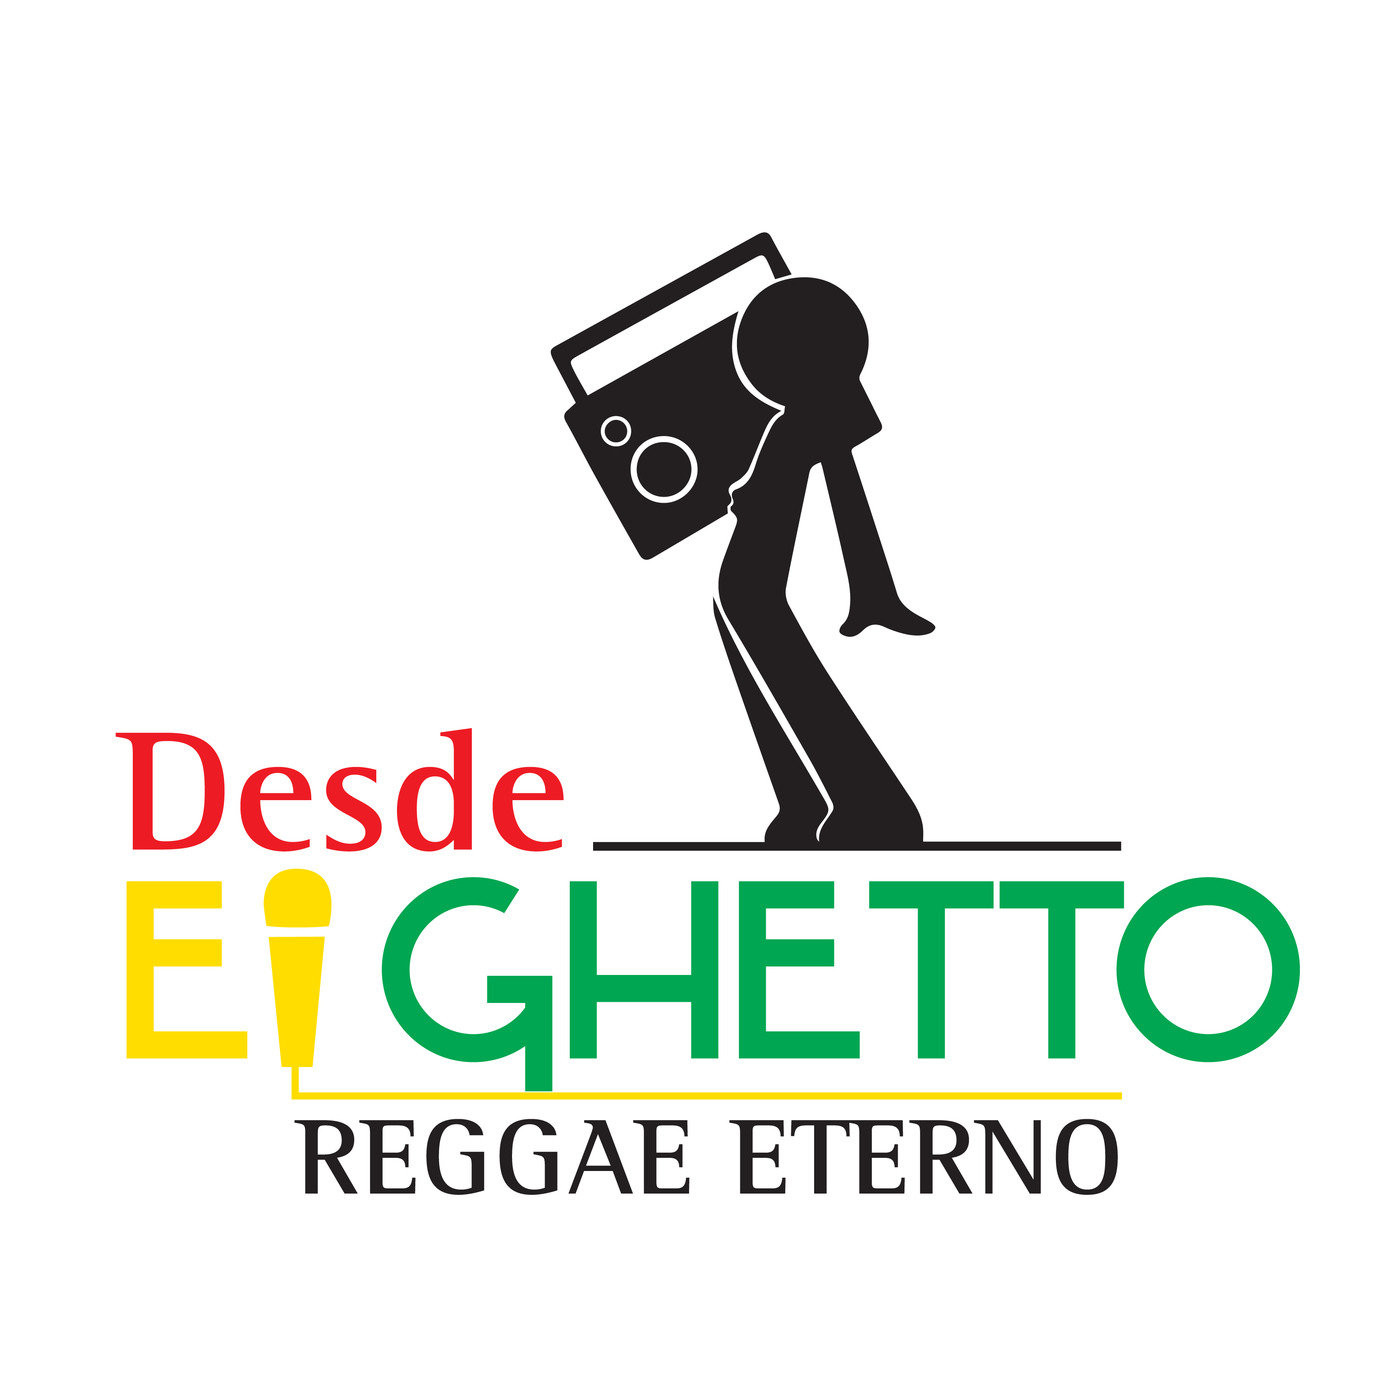 Podcast de desde elghetto 3D:La Casa del Reggae Cultural